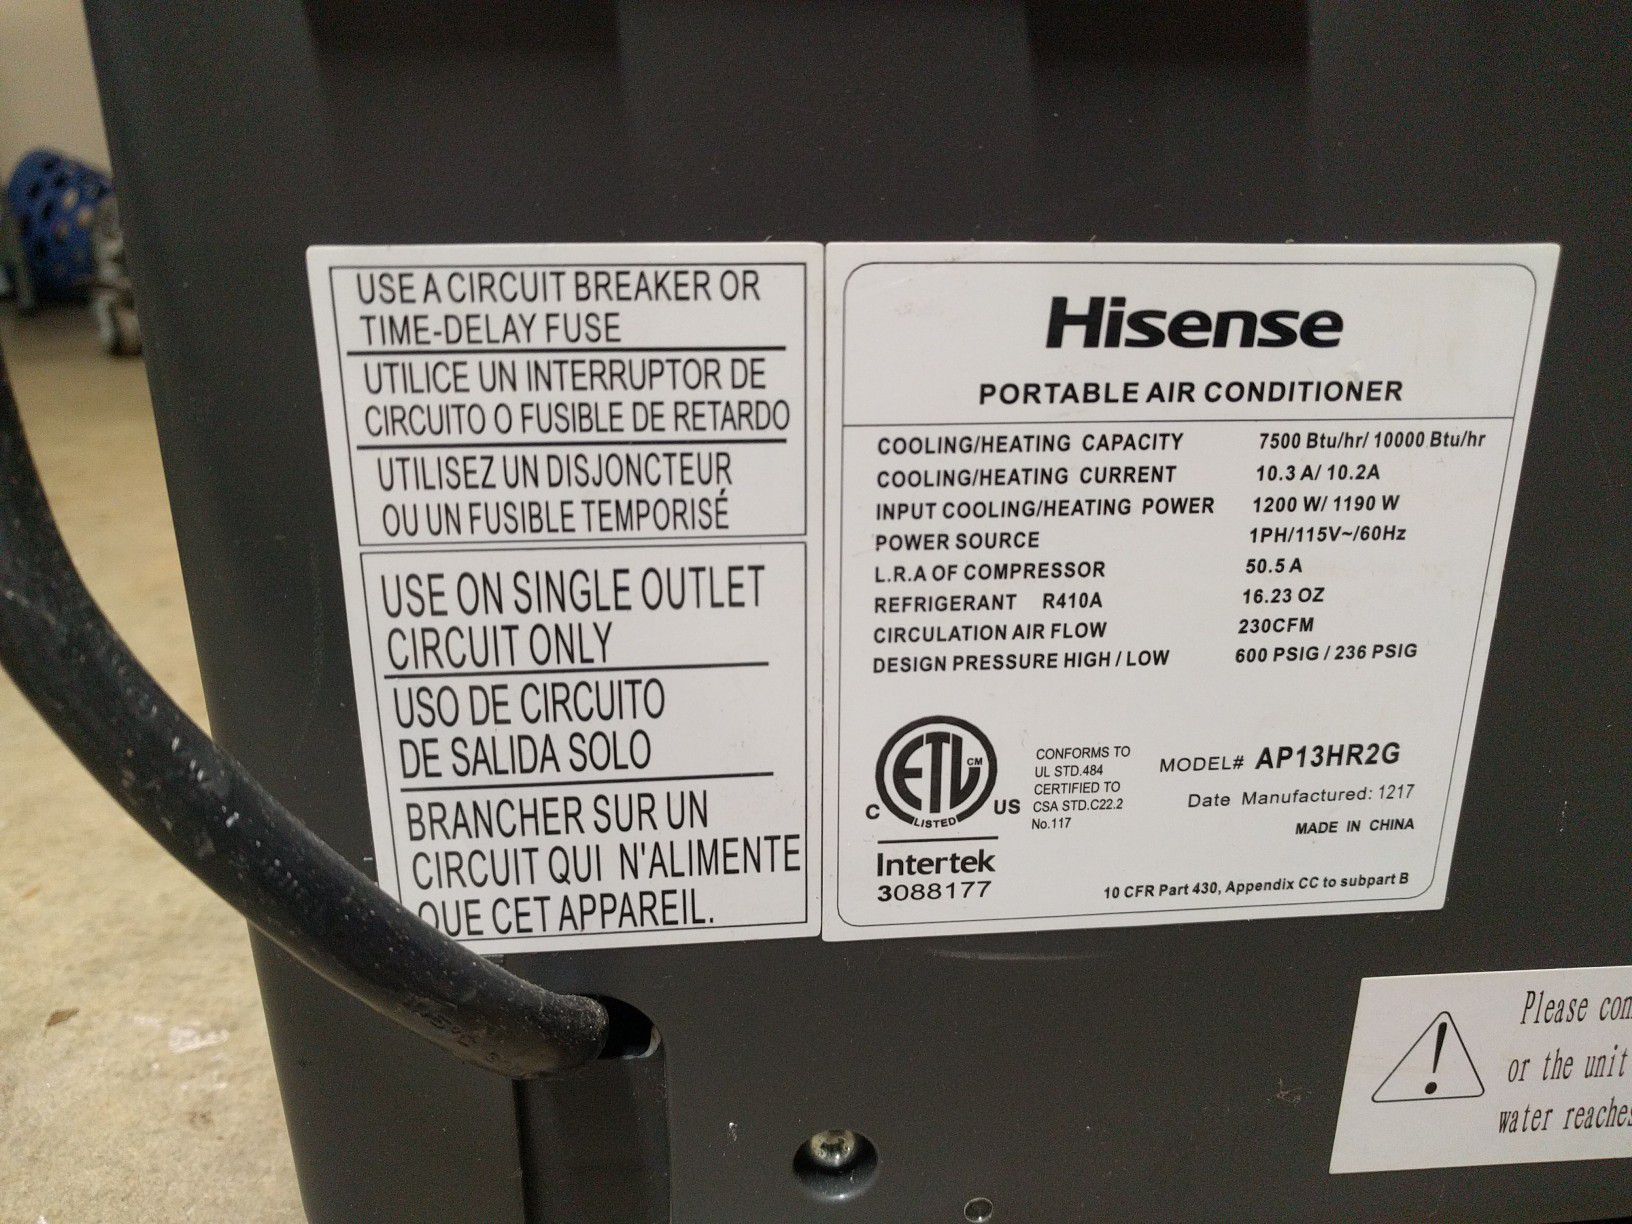 Hisense portable air conditioner with remote control